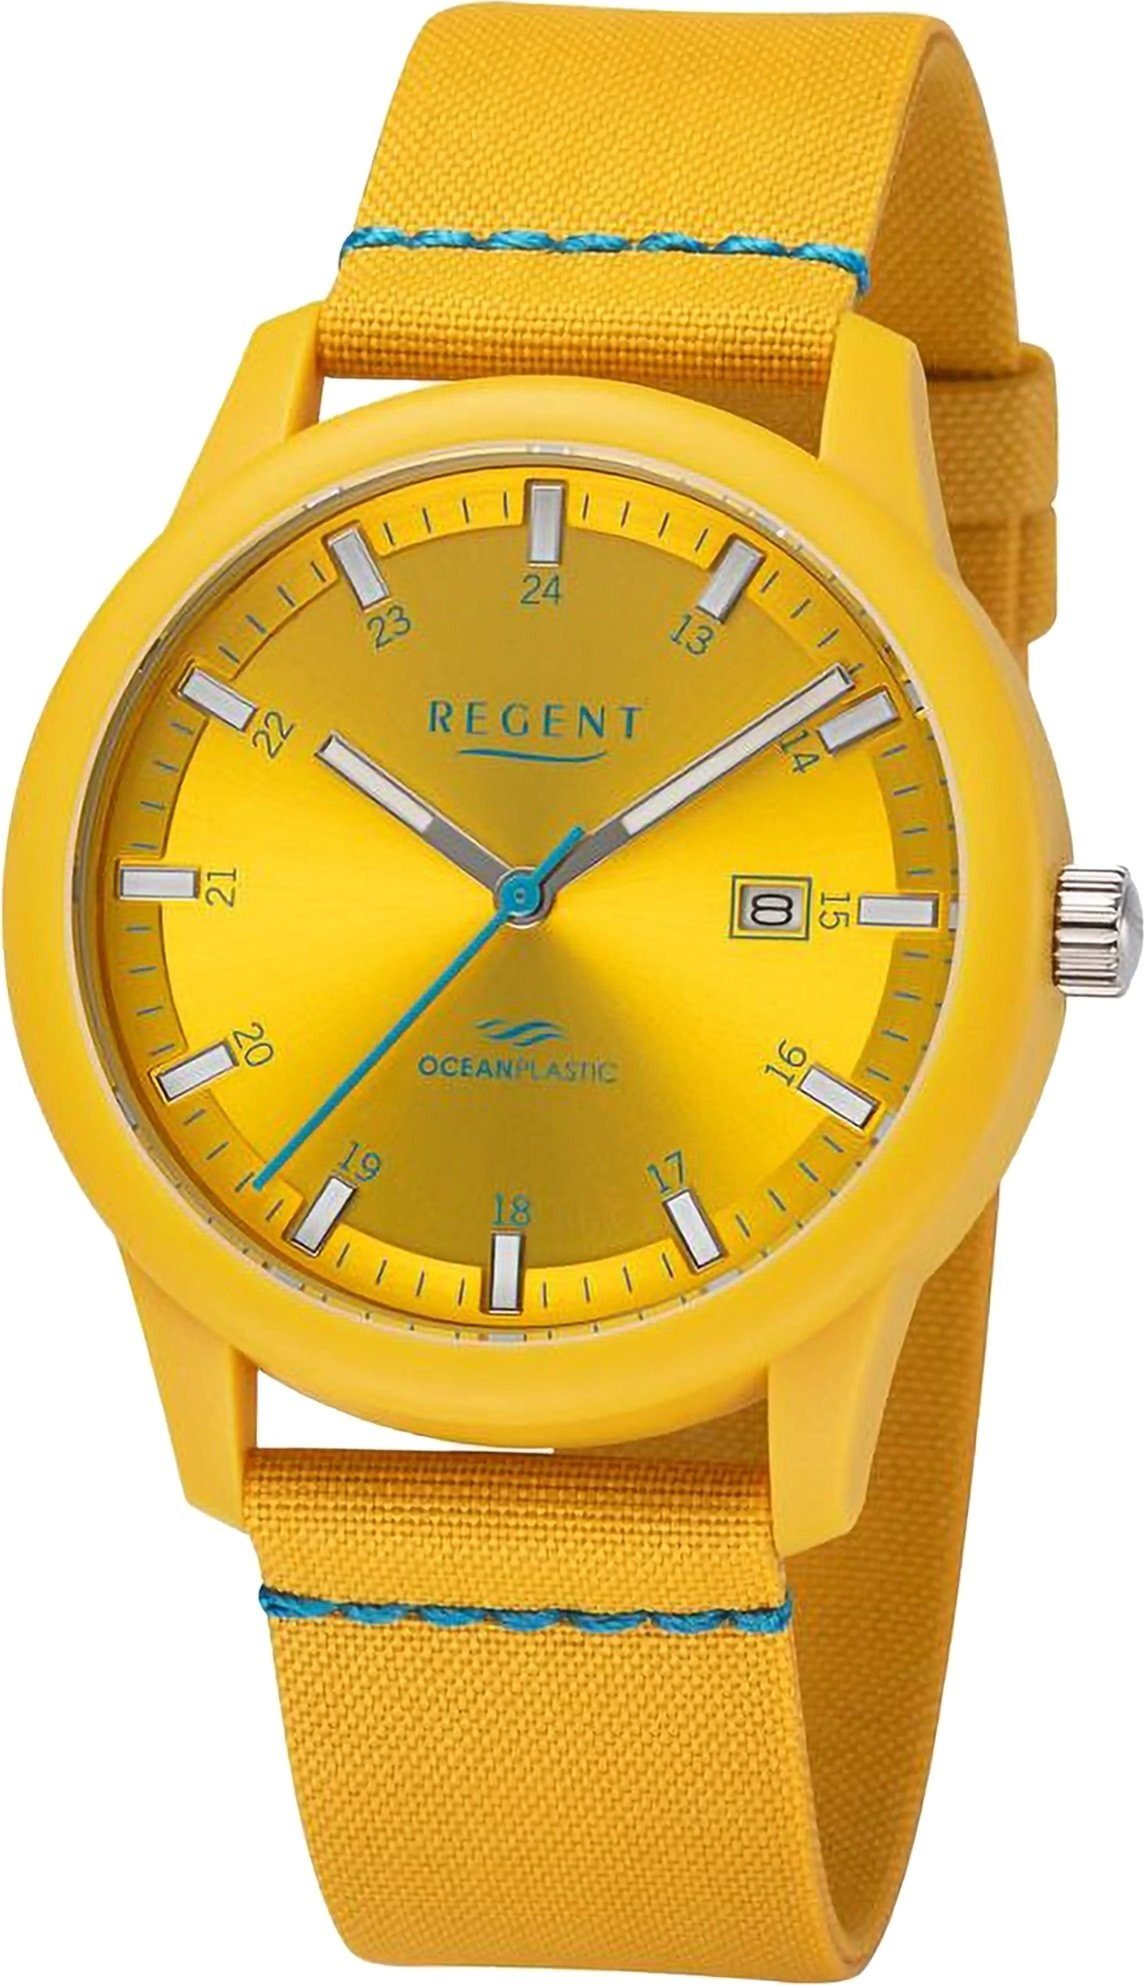 Gelbe Herren Armbanduhren online kaufen | OTTO